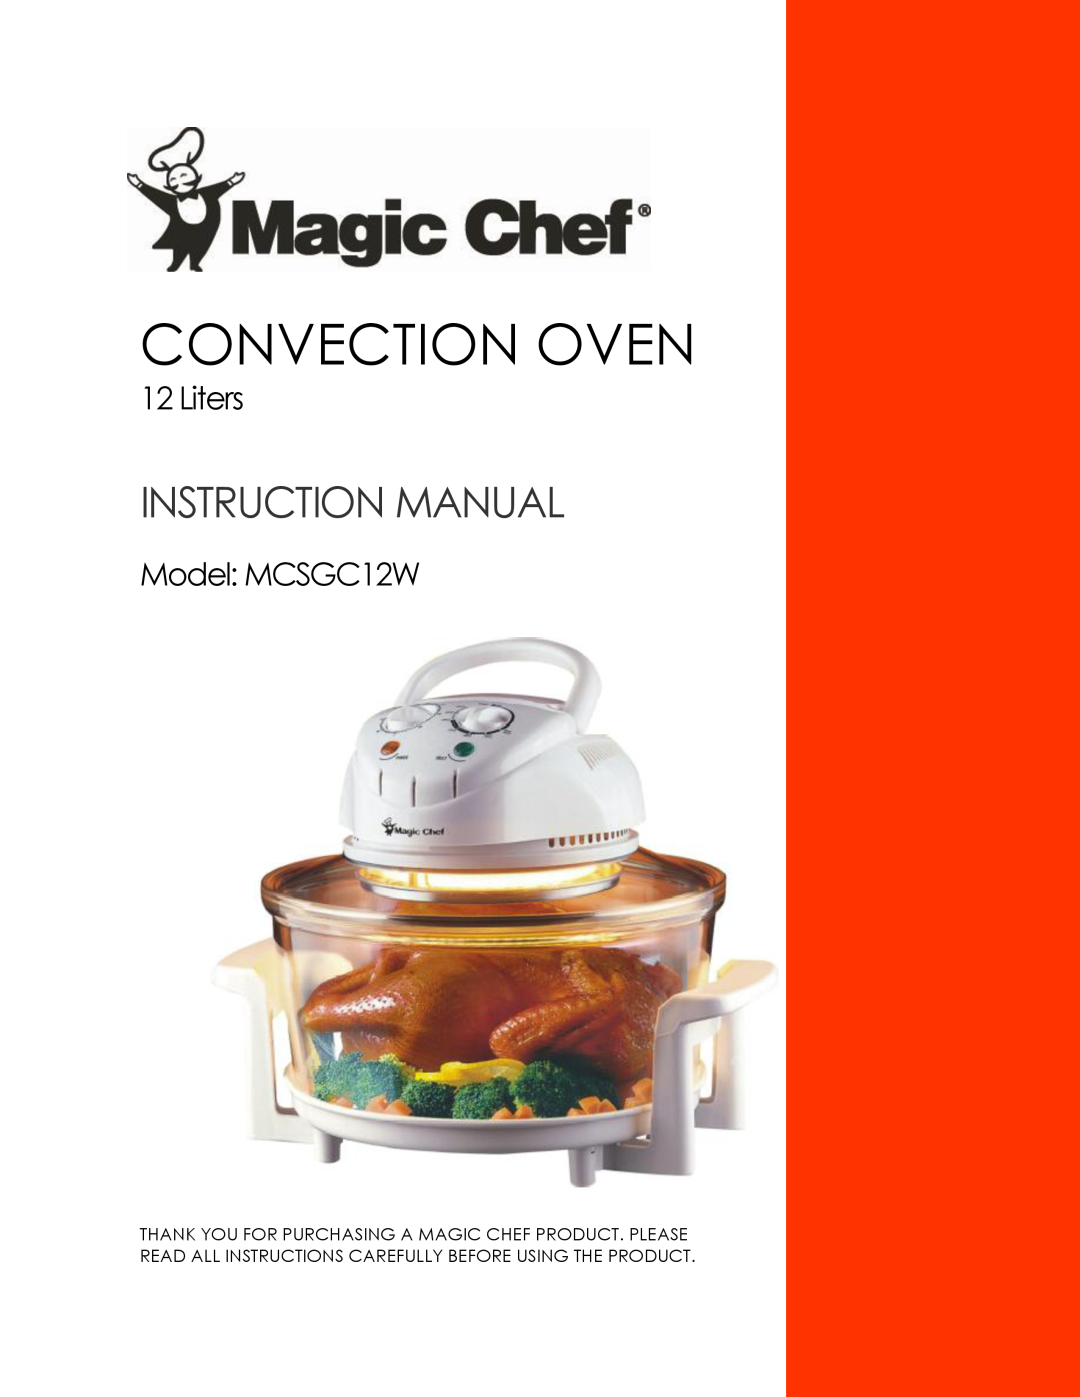 Magic Chef instruction manual Convection Oven, Liters, Model MCSGC12W 